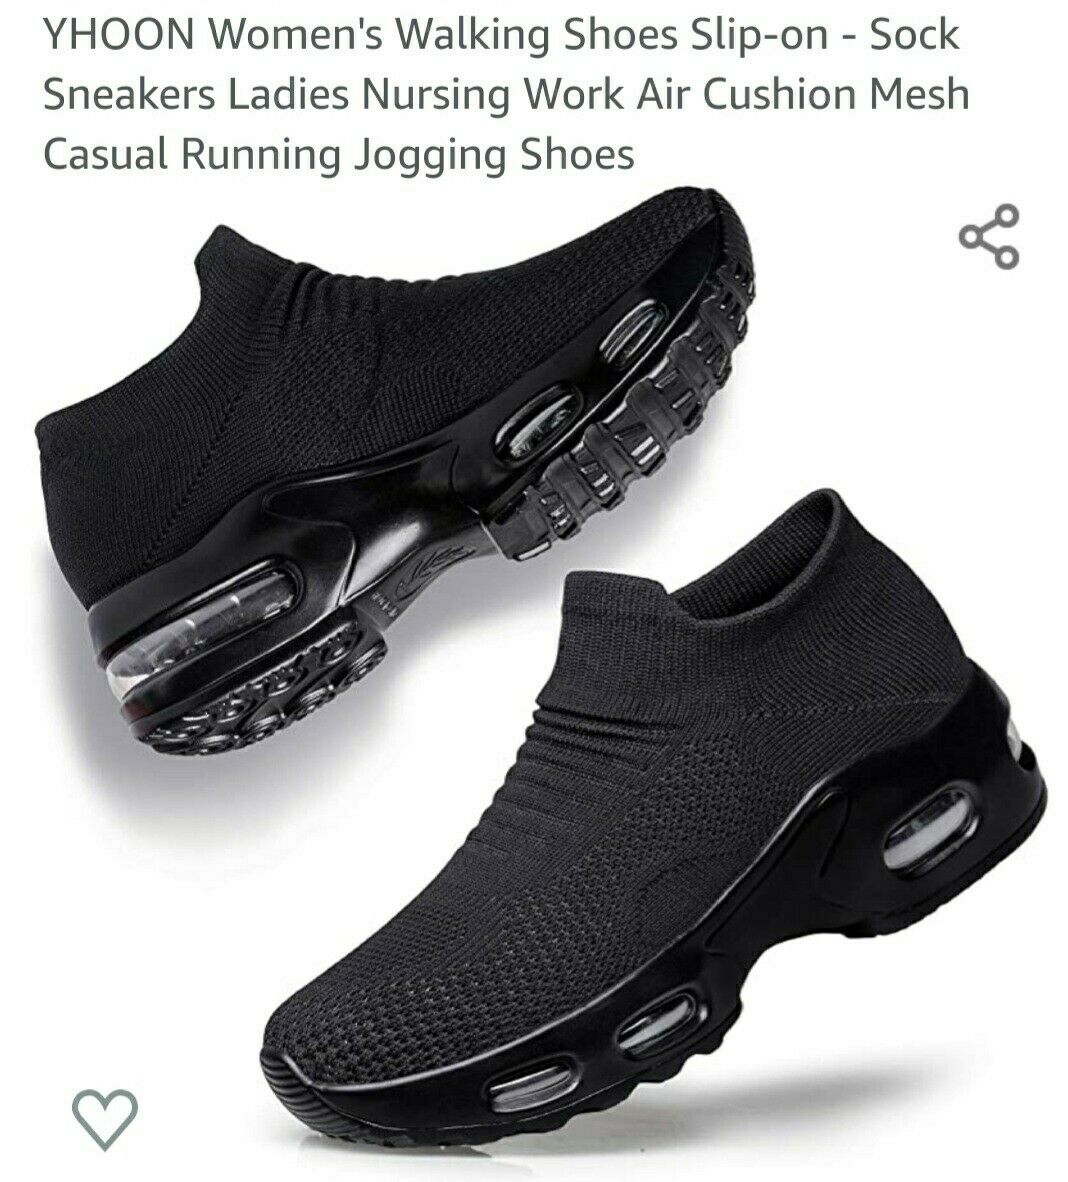 Yhoon Women's Walking Shoes - Sock Sneakers Slip-on Mesh Platform Air Cushion